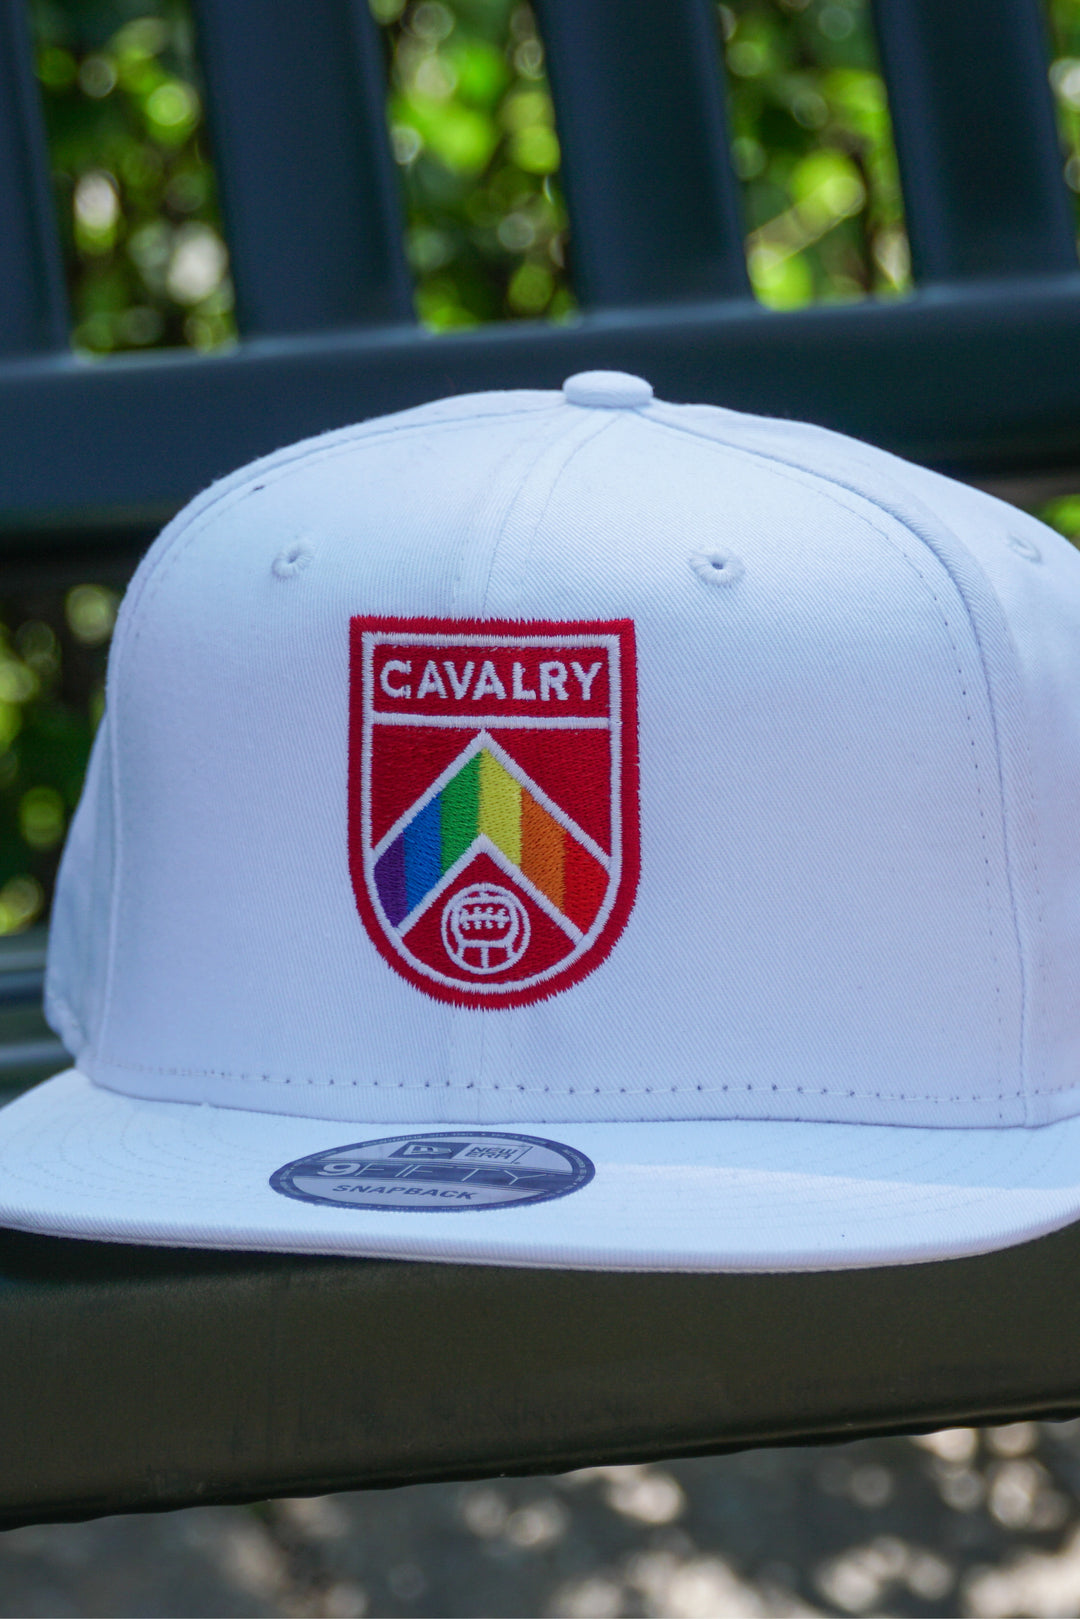 Ball Cap with Pride Cavalry Crest